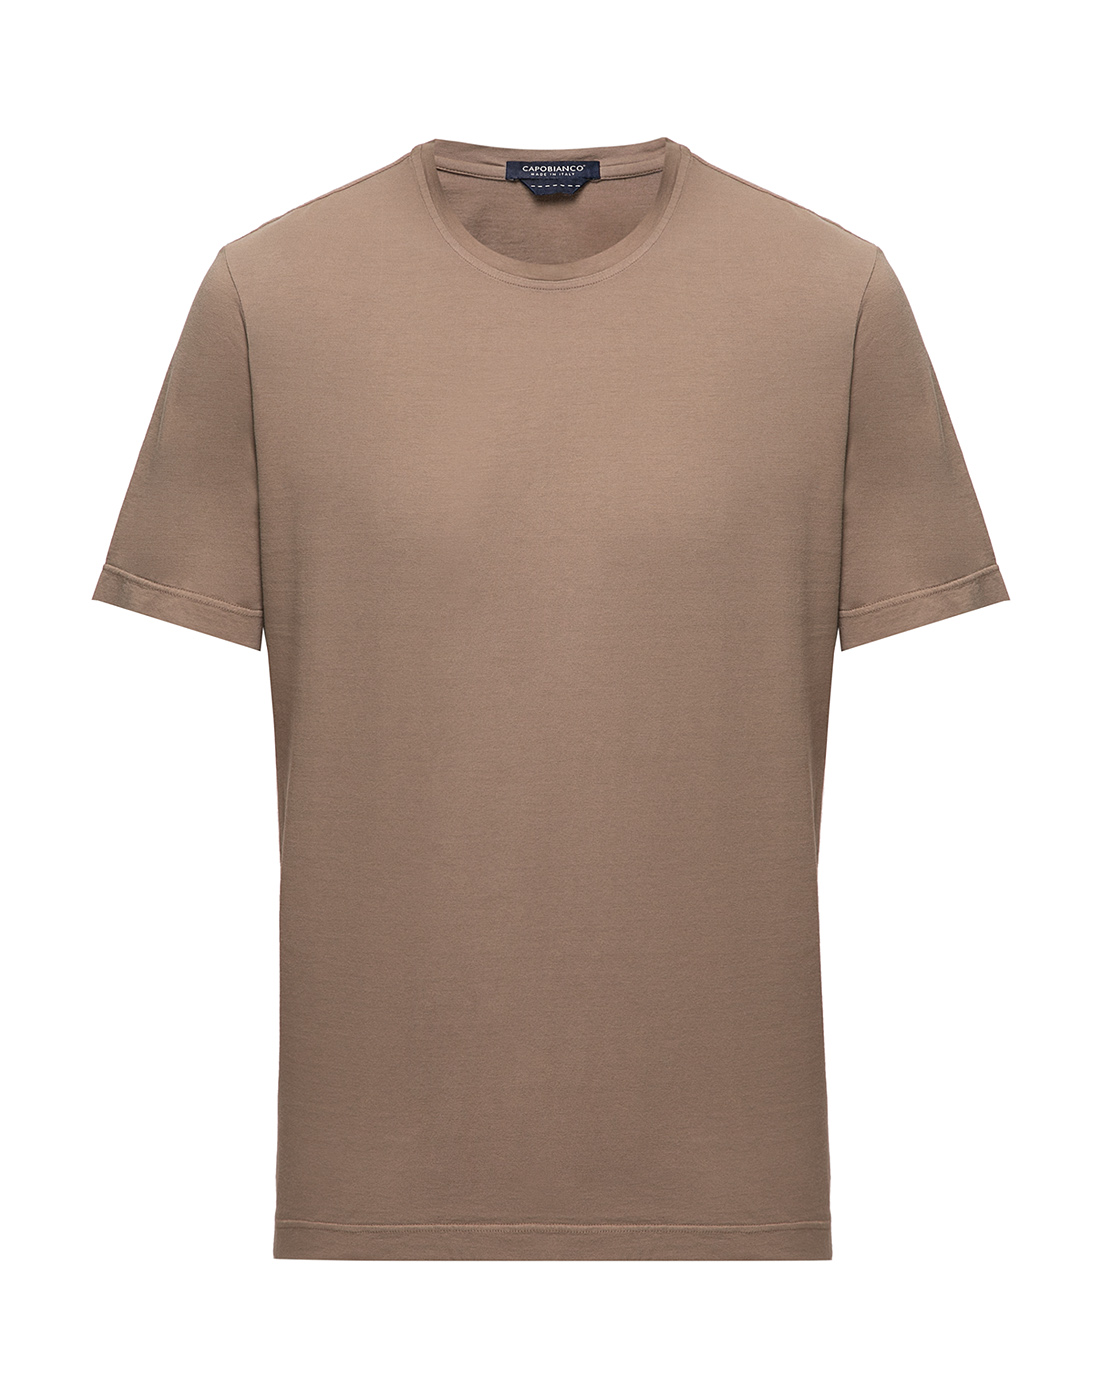 Мужская светло-коричневая футболка Capobianco S8M660.AL01. TABACCO-1